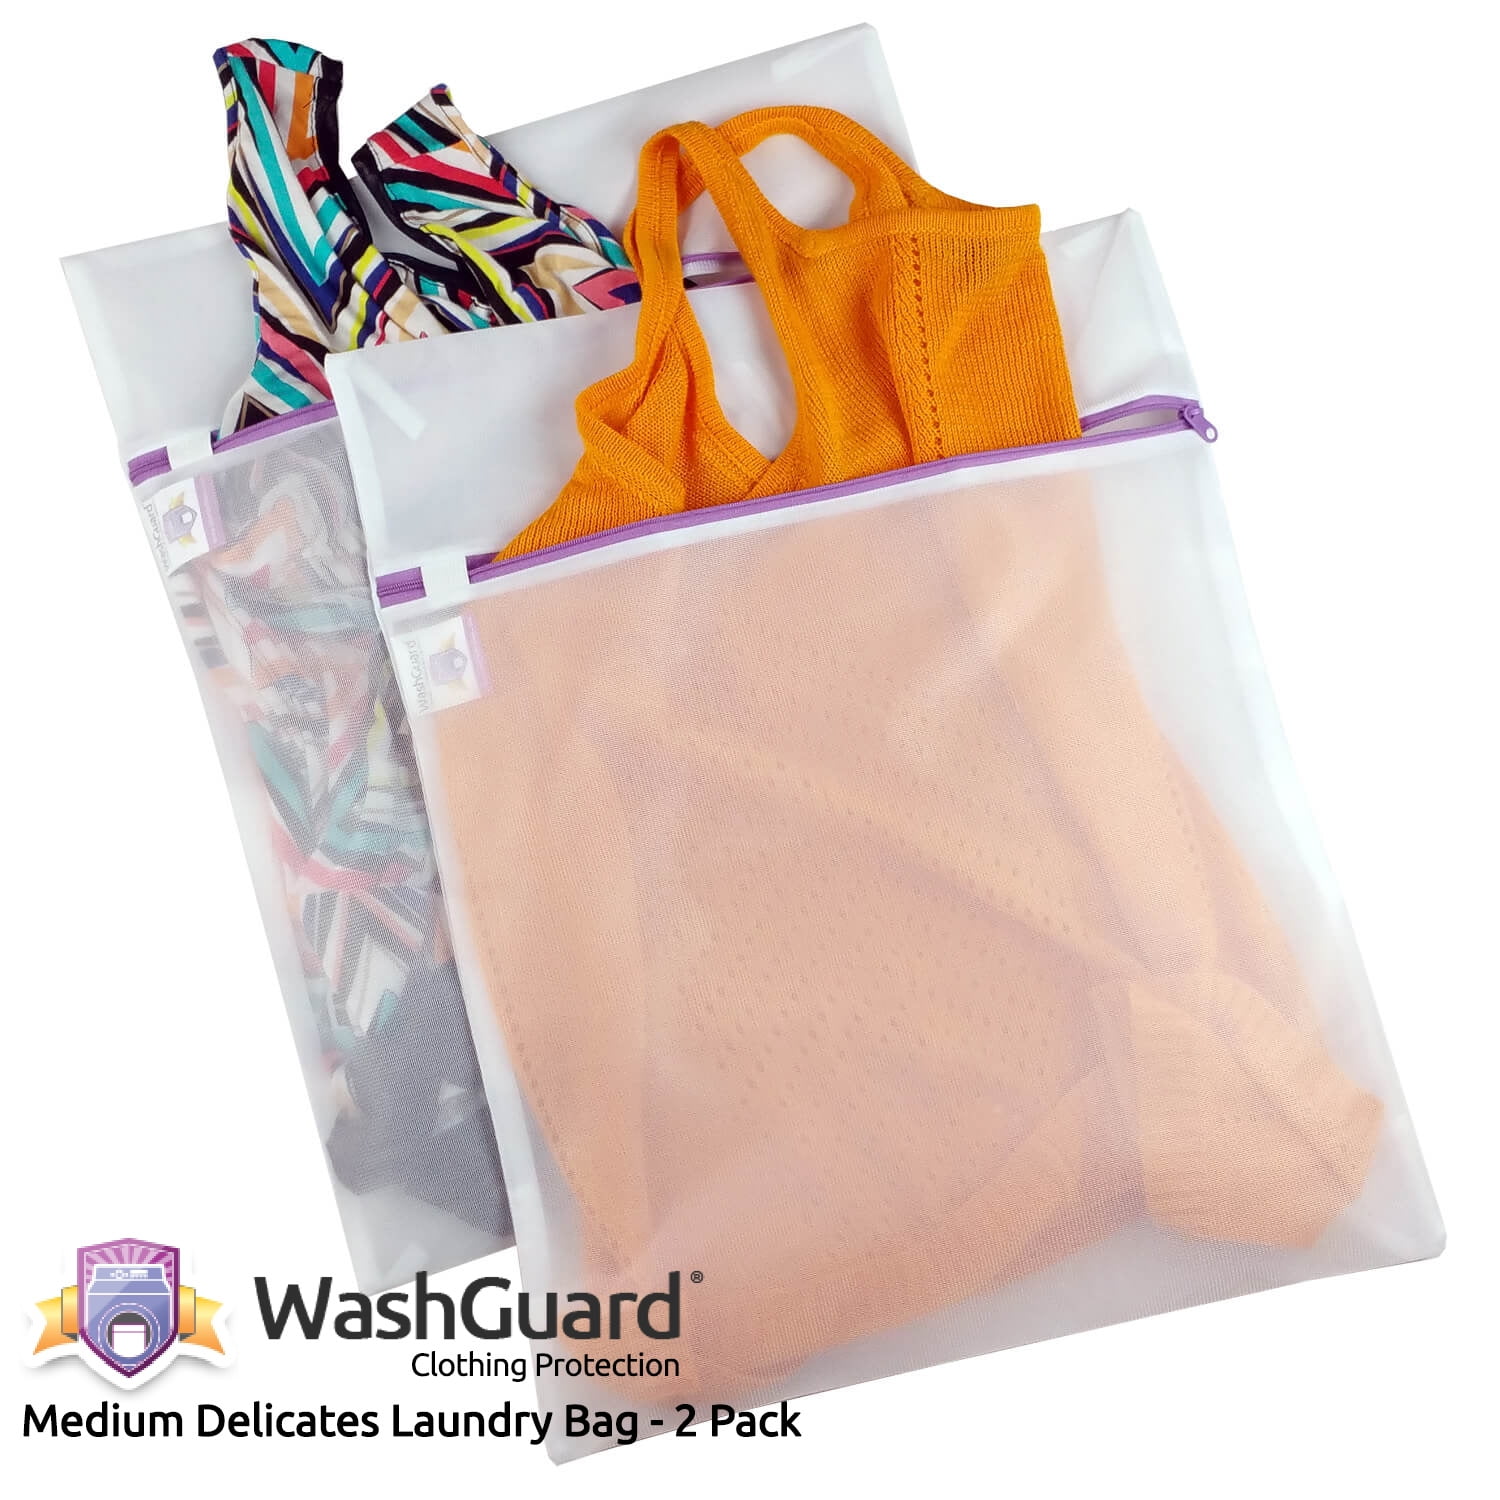 Fine Weave Fabric Zipper Closure Details about   mDesign Medium Laundry Mesh Wash Bag Was... 